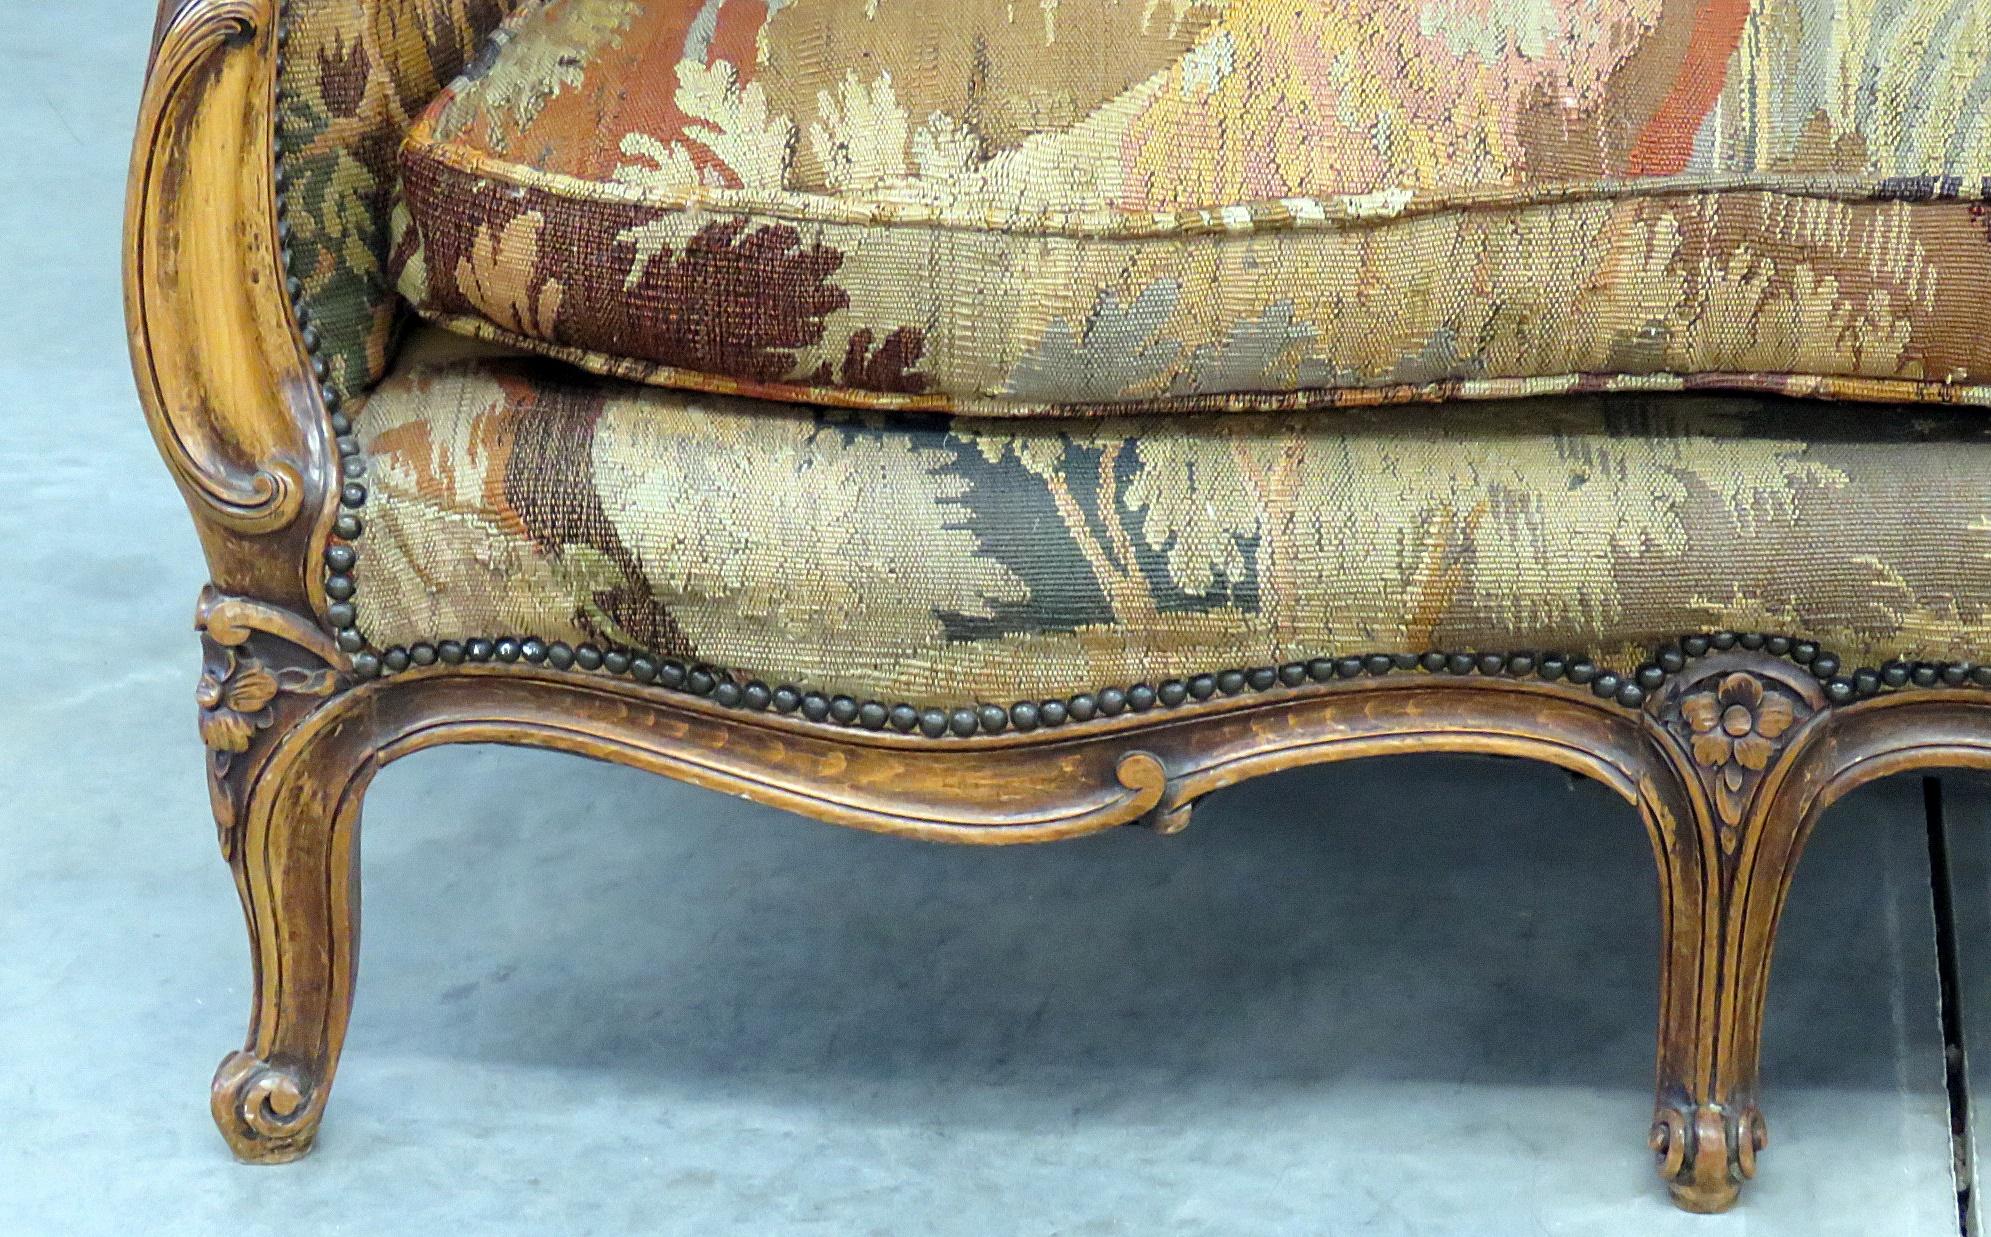 Antique French Regency style needlepoint sofa with nailhead trim.